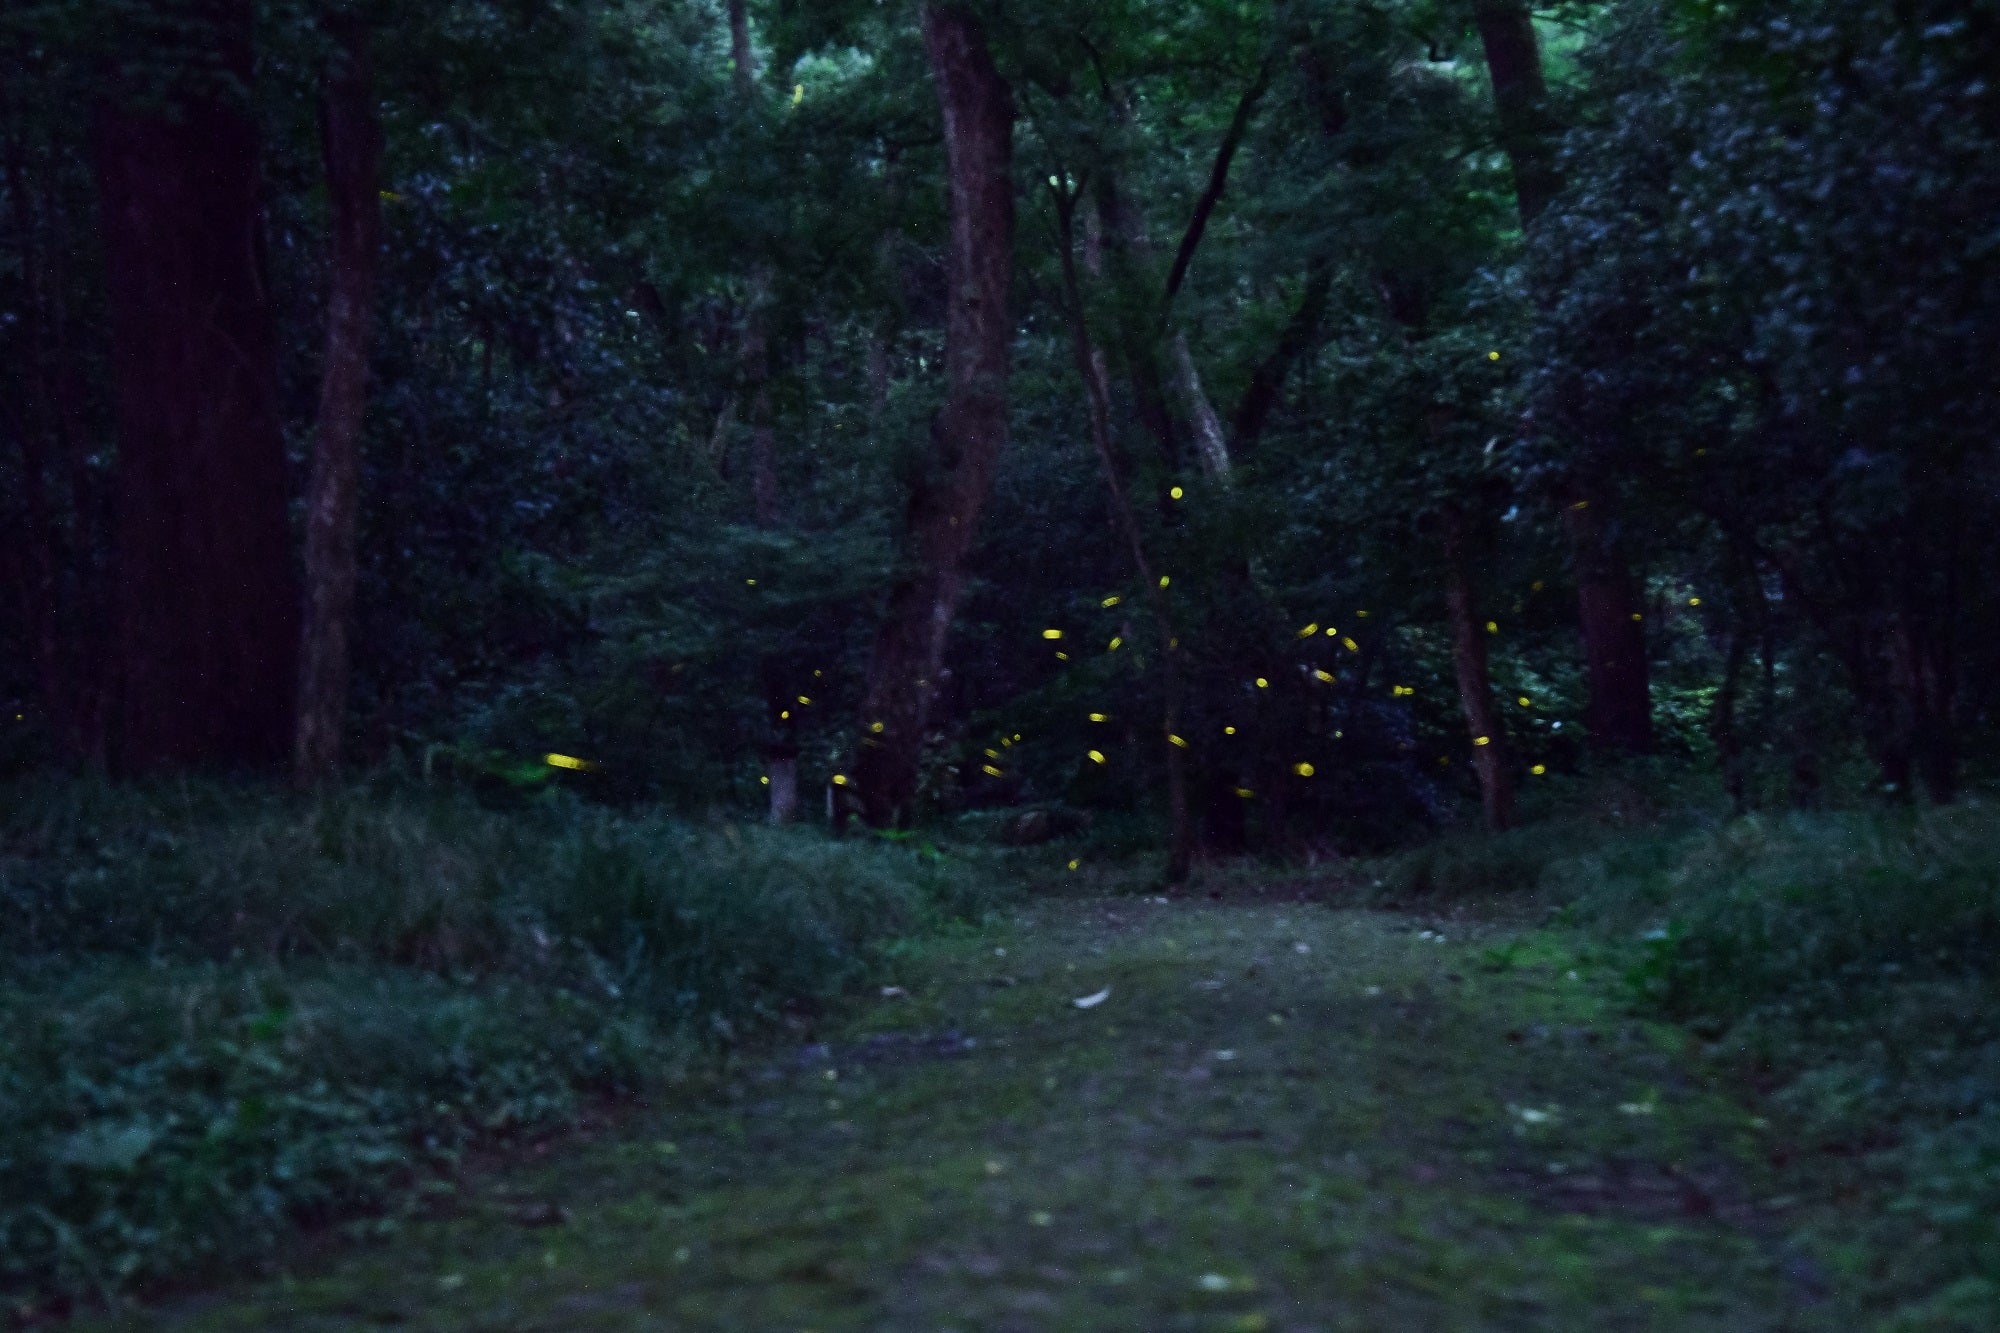 Unusual fireflies rely on habitat in New Jersey wetlands